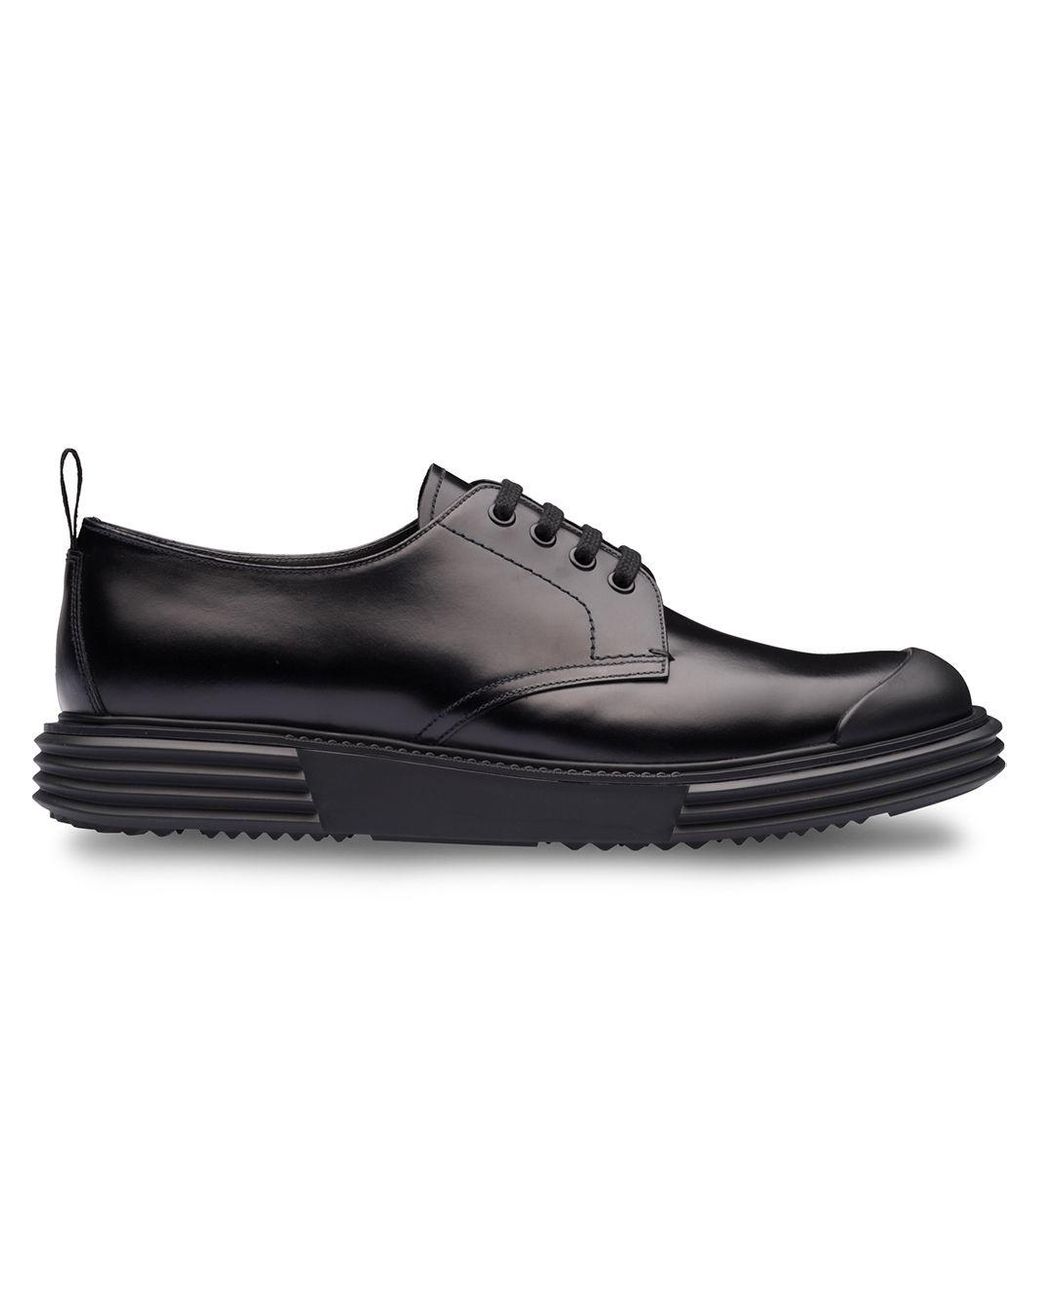 Prada Shoes for Men - Shop Now on FARFETCH